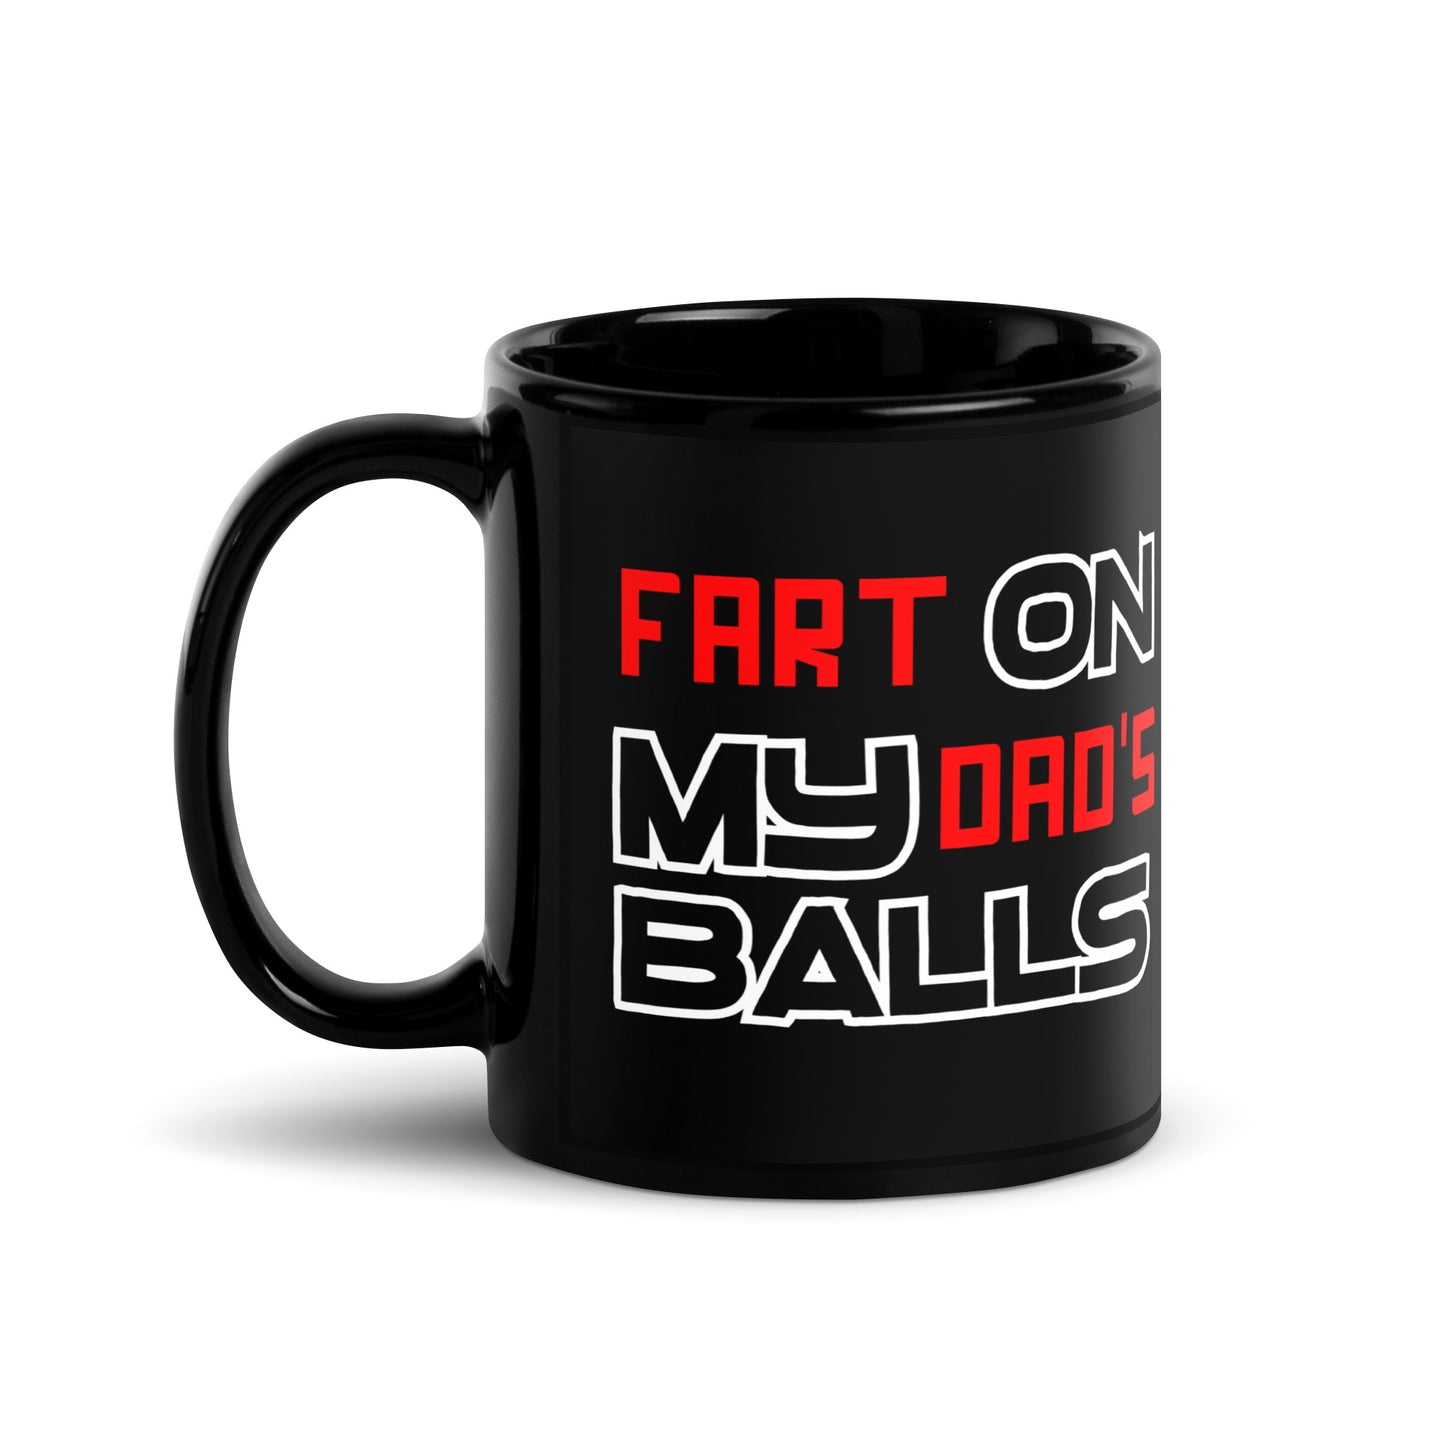 Fart On My Dad's Balls Mug